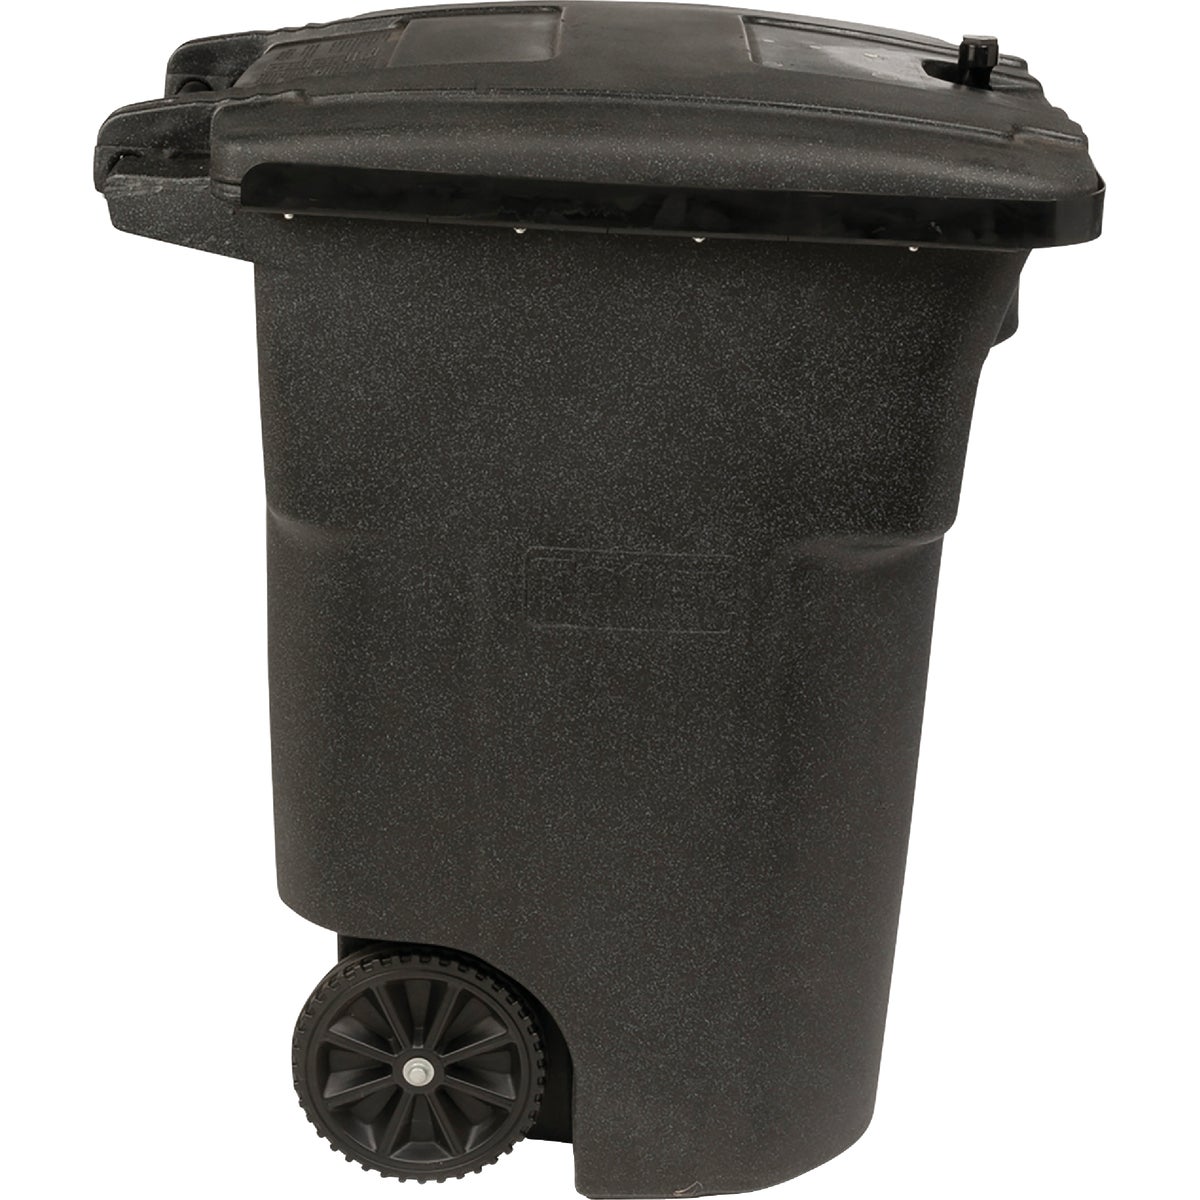 Bear Tough Trash Can with Wheels - 96 Gallon H-8701 - Uline